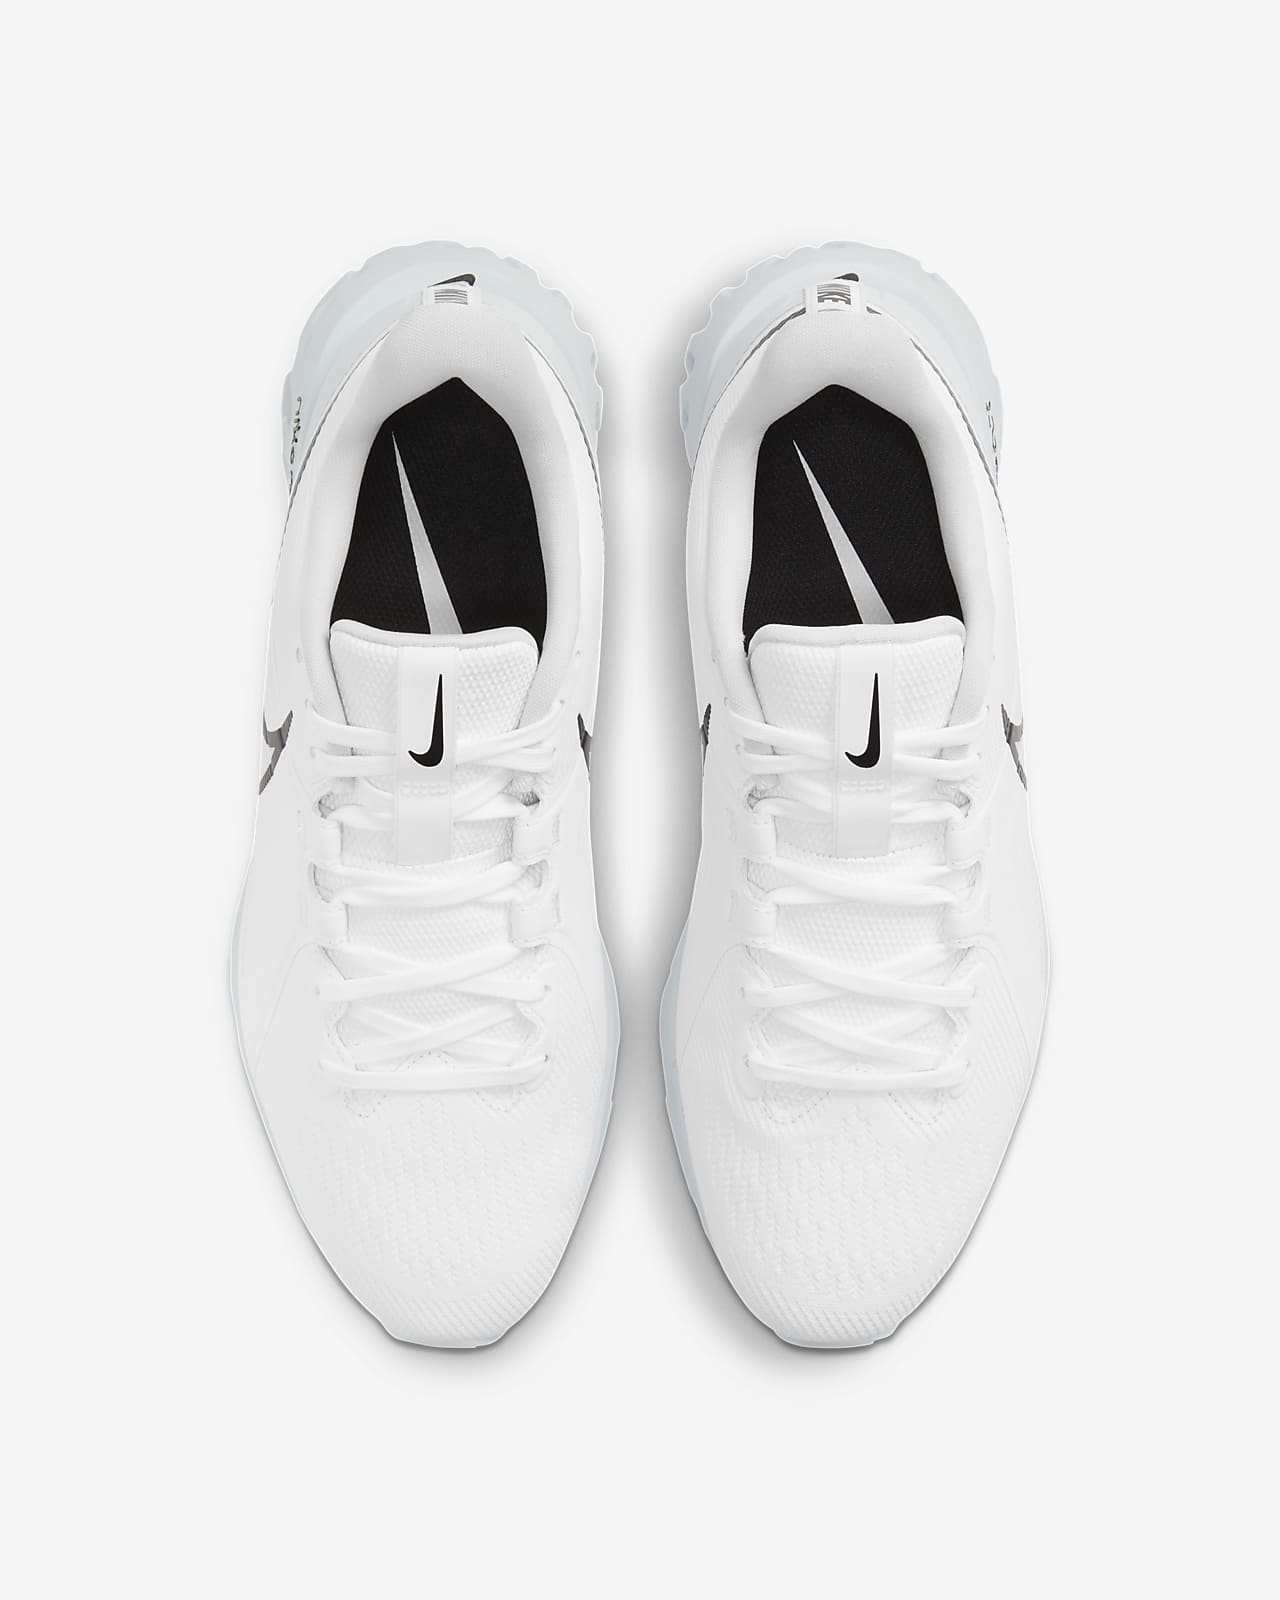 nike pro shoes white